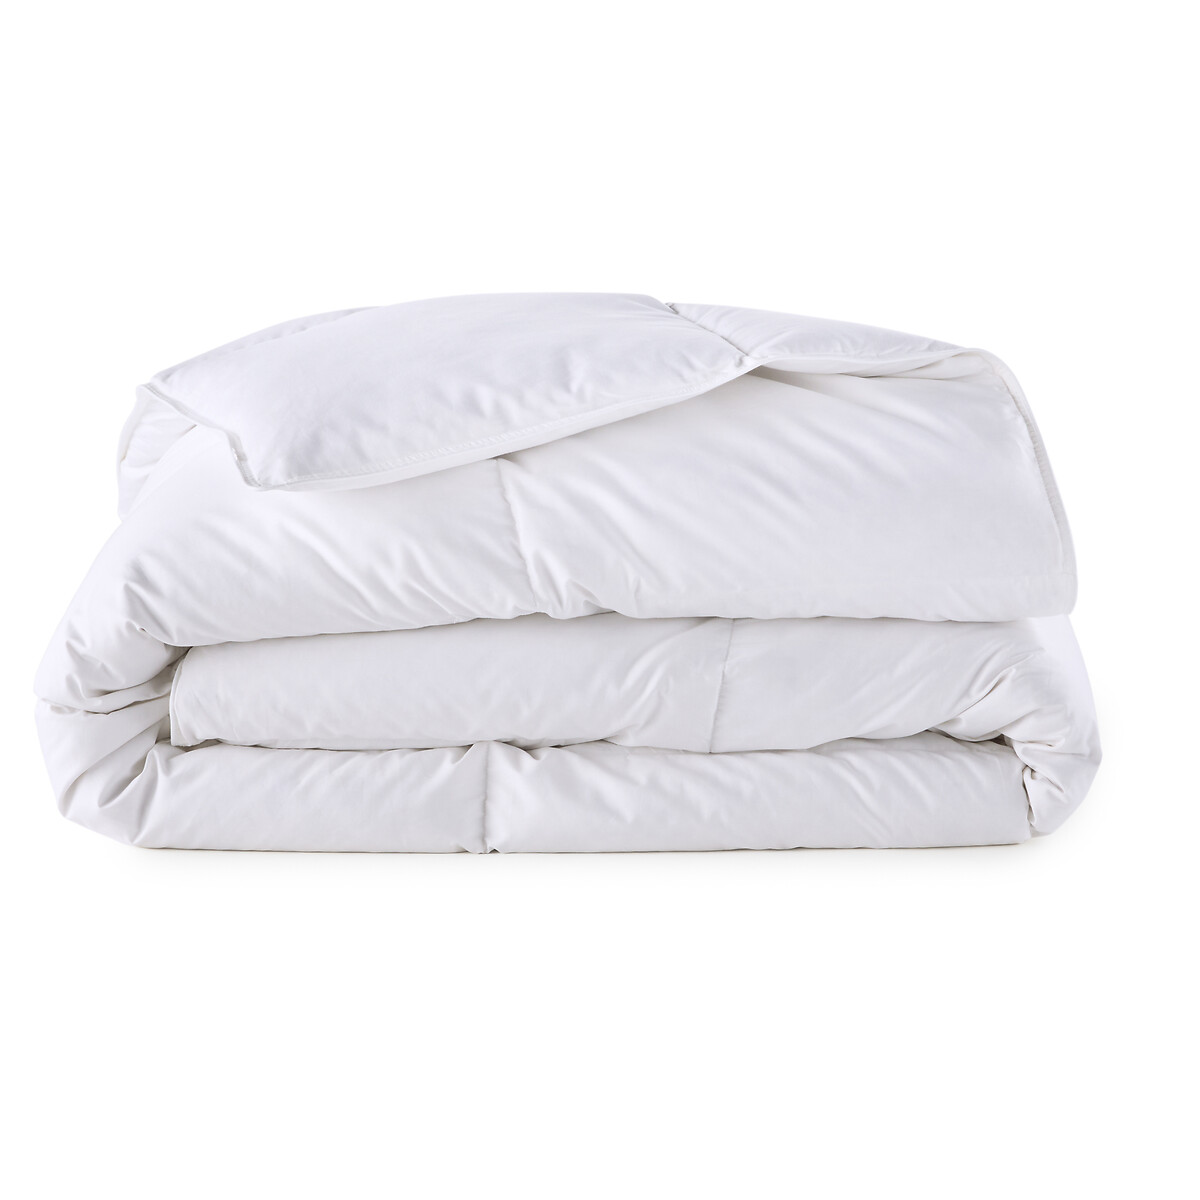 Одеяло LaRedoute 50 пуха 370 гм2 с обработкой Proneem 140 x 200 см белый, размер 140 x 200 см - фото 2